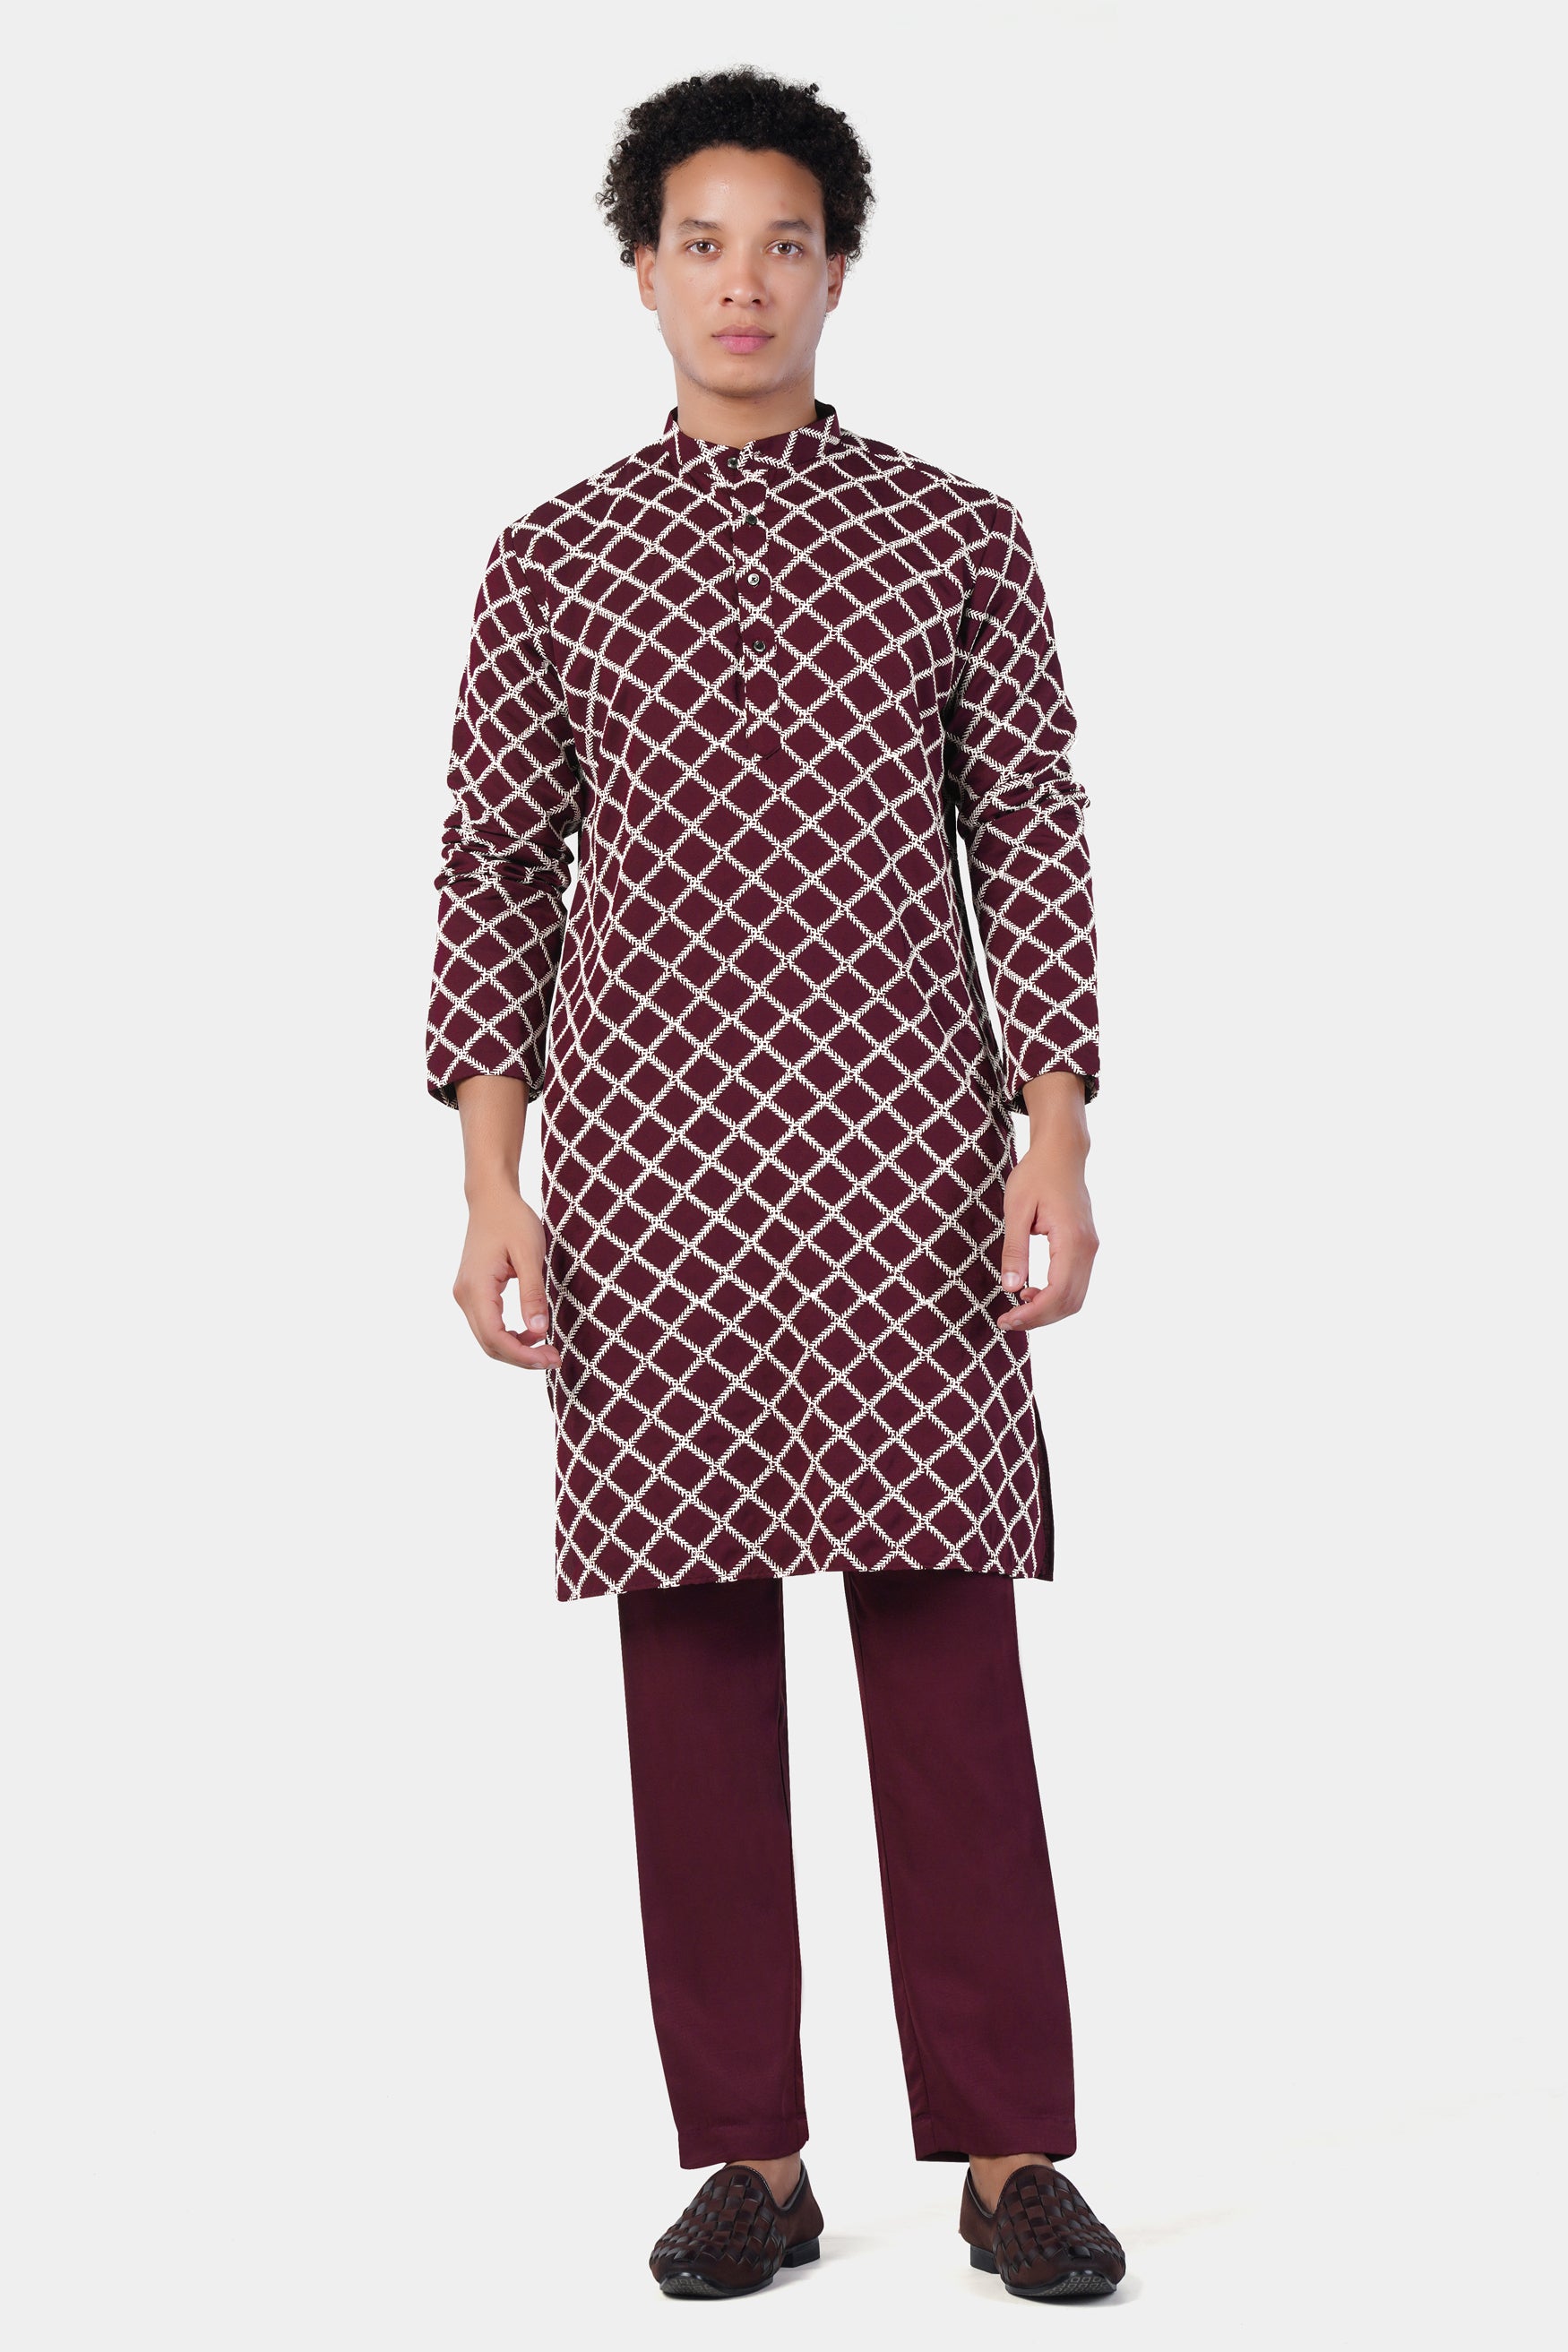 Aubergine Maroon and White Geometric Pattern Thread Embroidered Subtle Sheen Viscose Designer Kurta Set